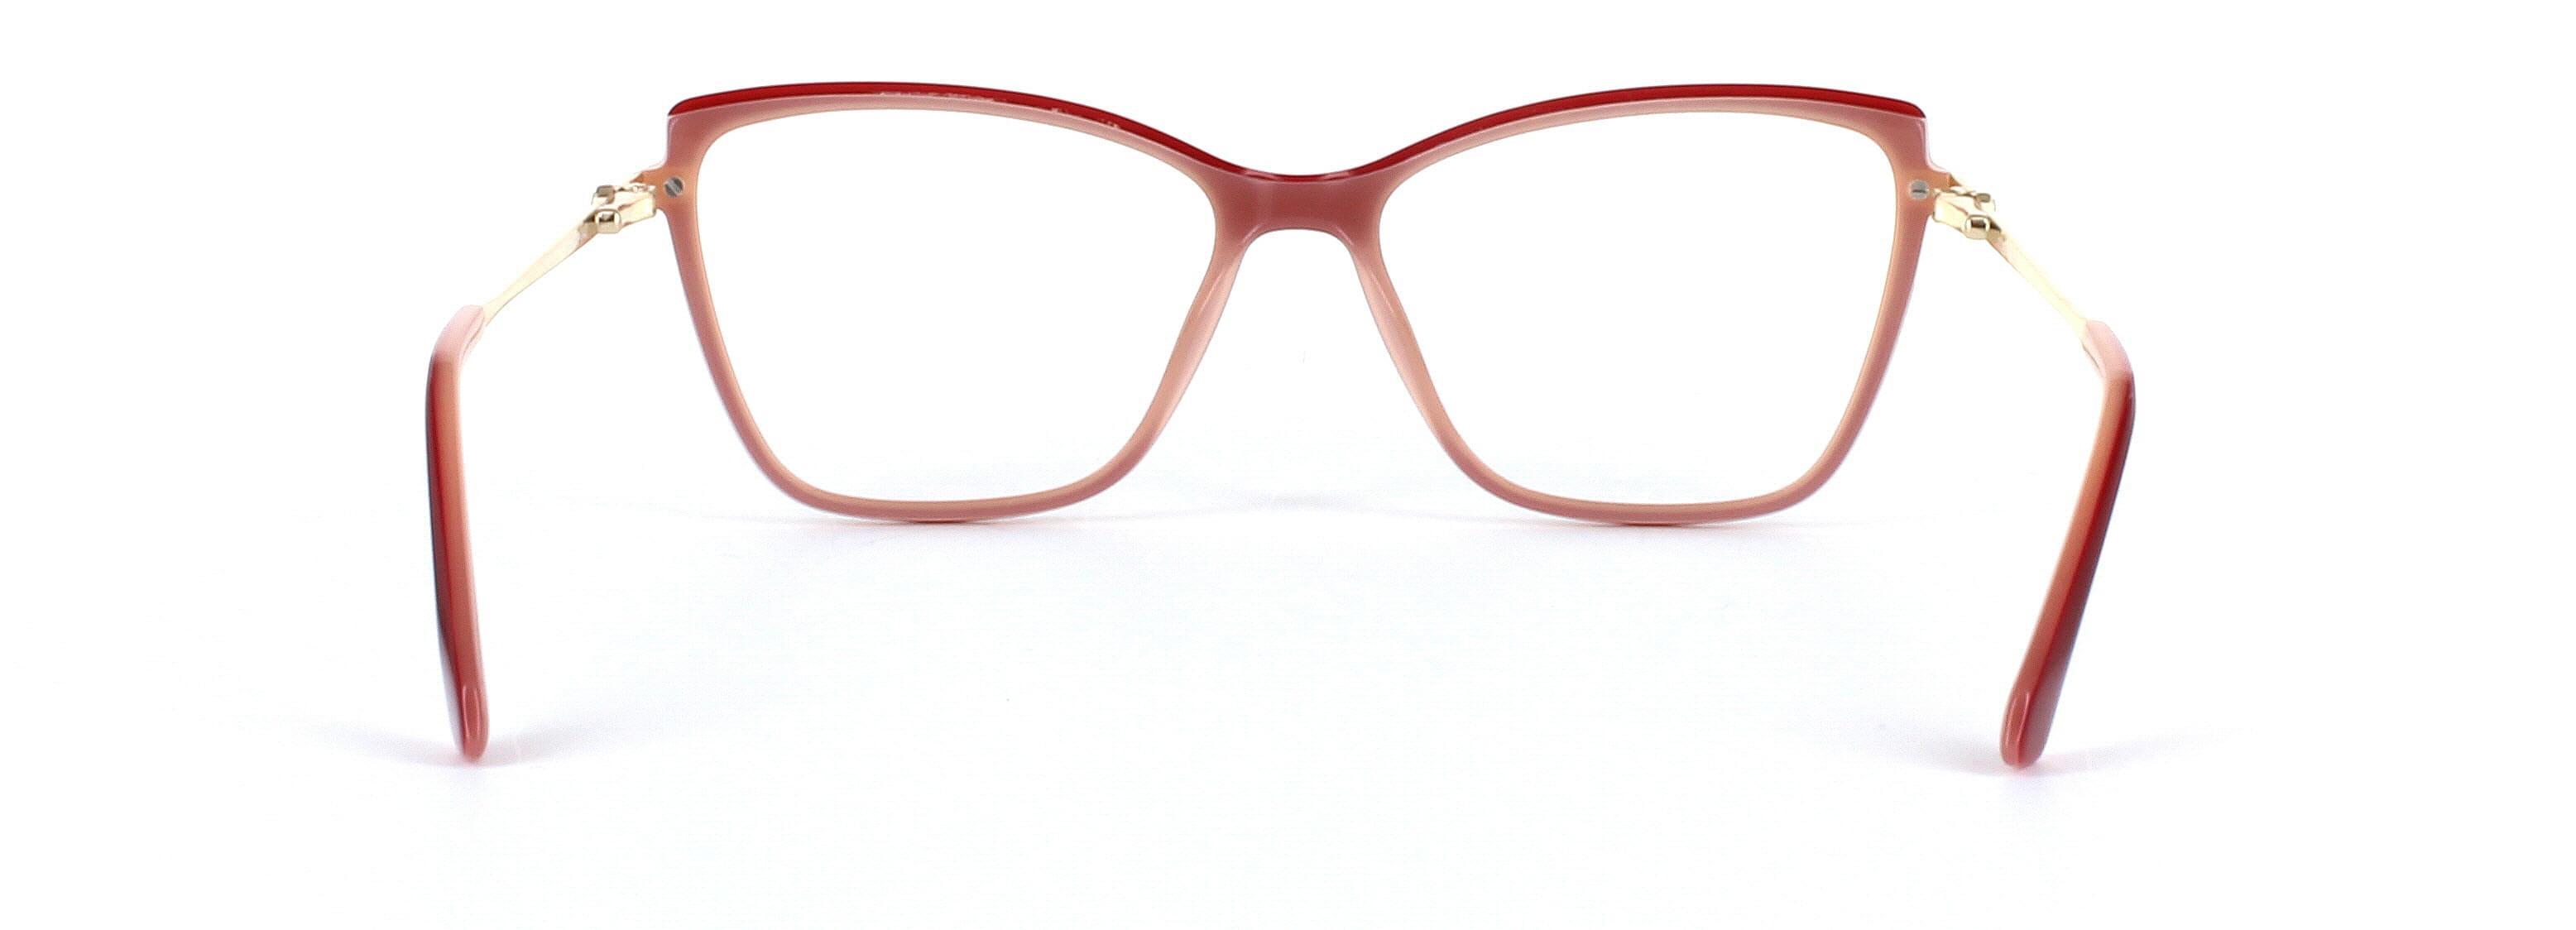 Jeanine Red Full Rim Acetate Glasses - Image View 3